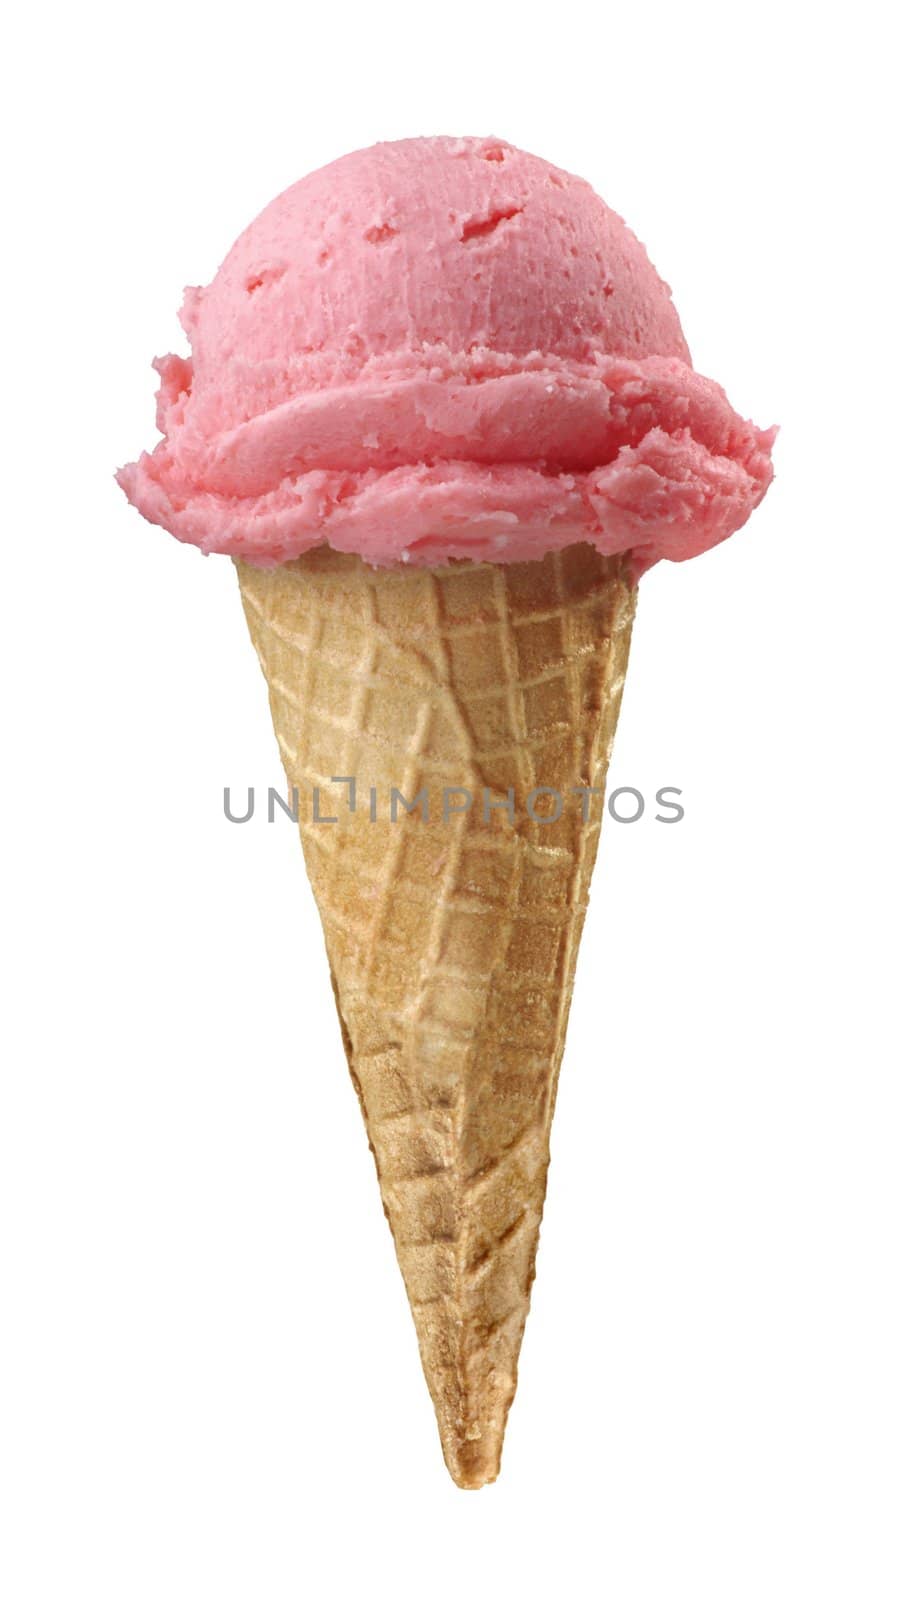 Strawberry ice cream cone by Baltus